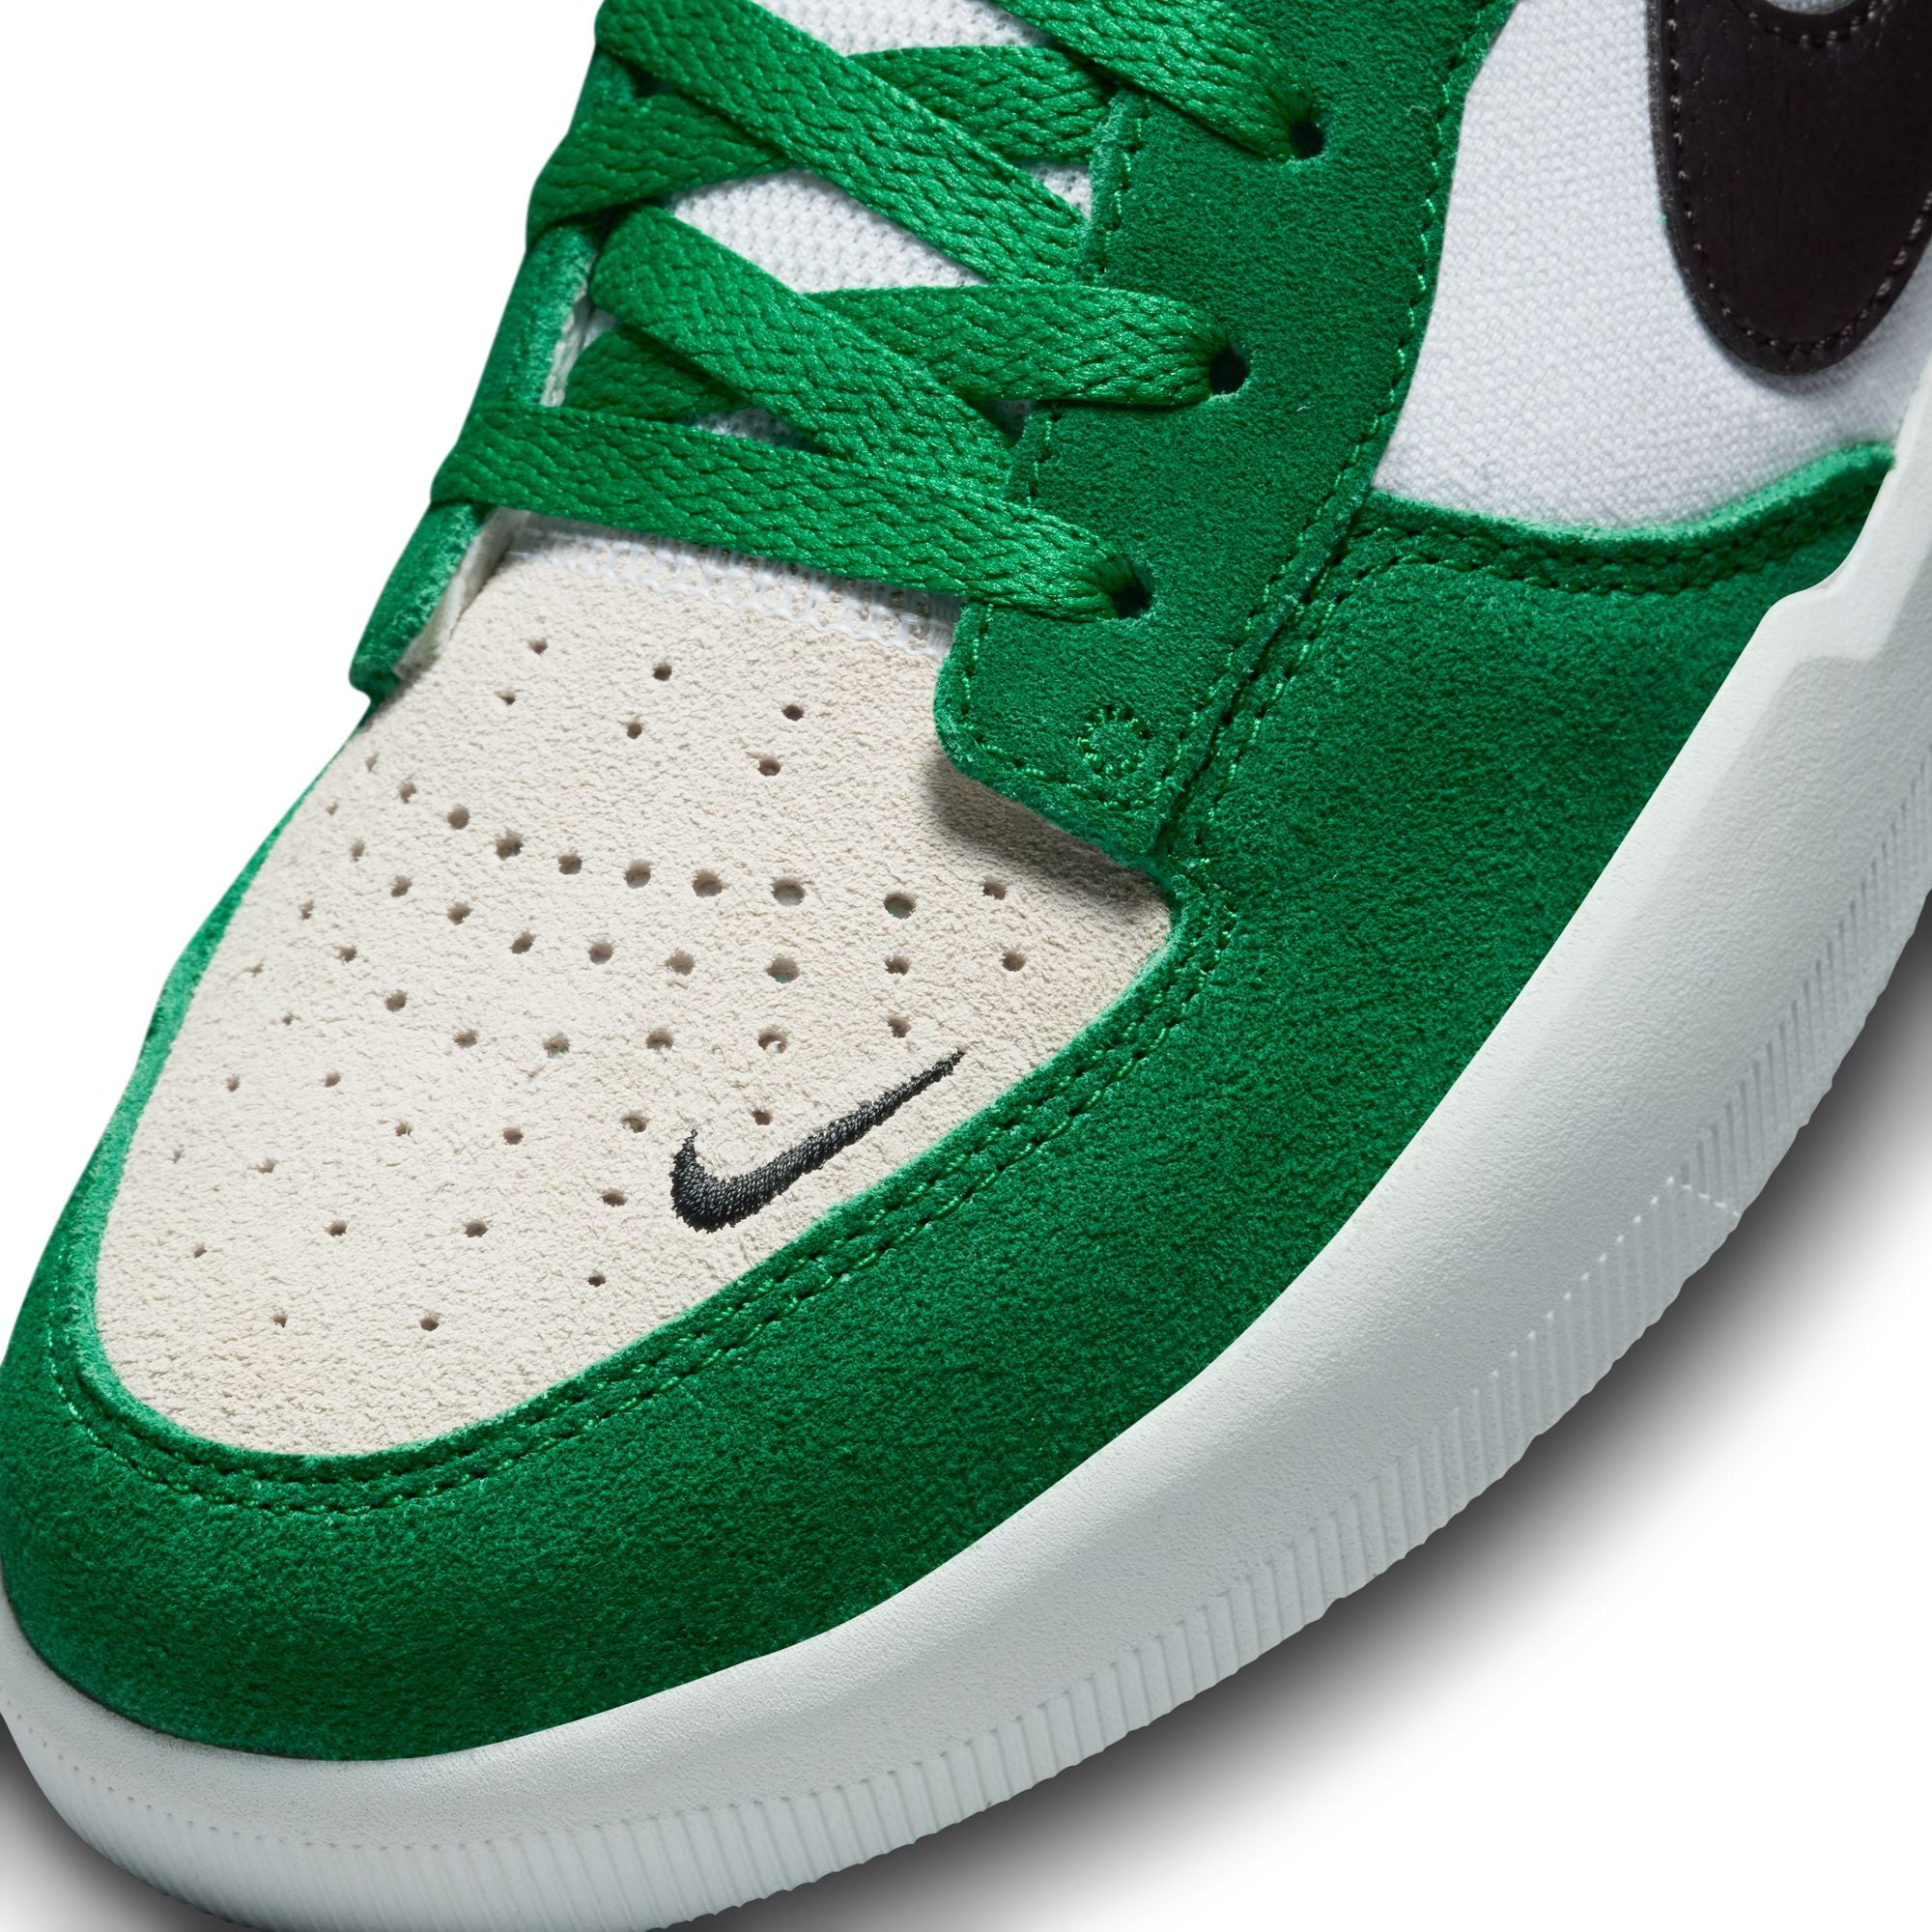 Pine Green Force 58 Nike SB Skate Shoe Detail